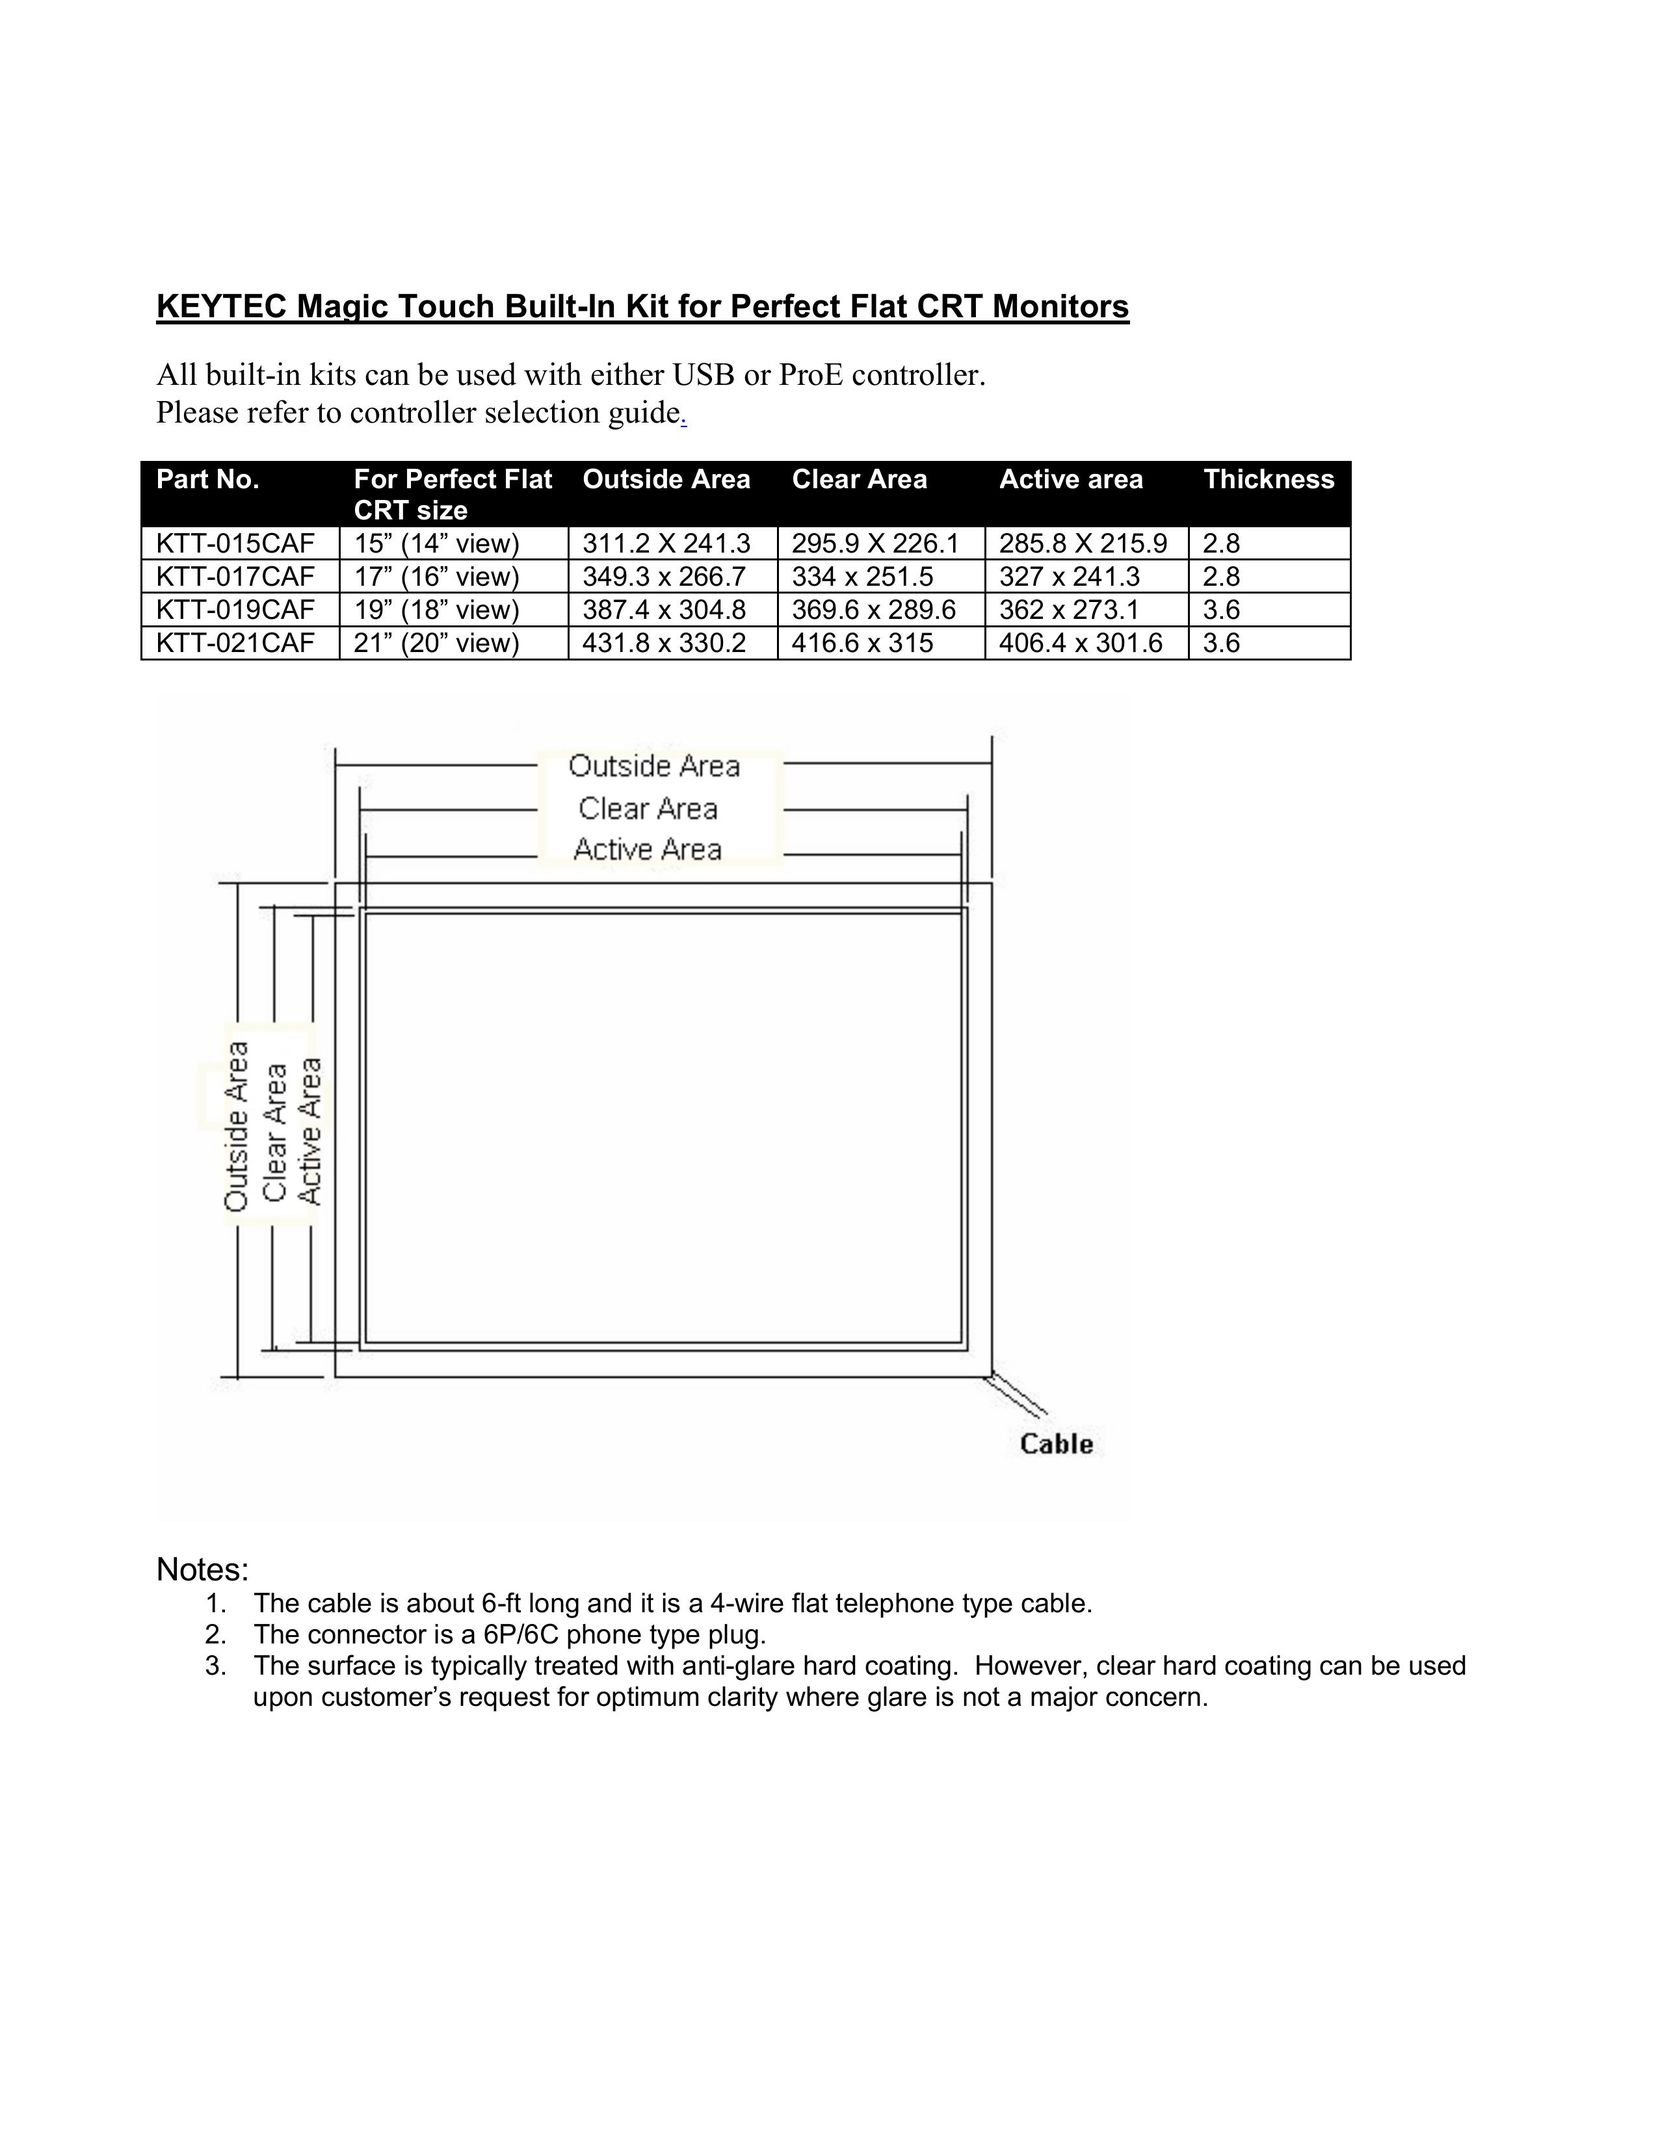 Keytec KTT-021CAF Computer Monitor User Manual